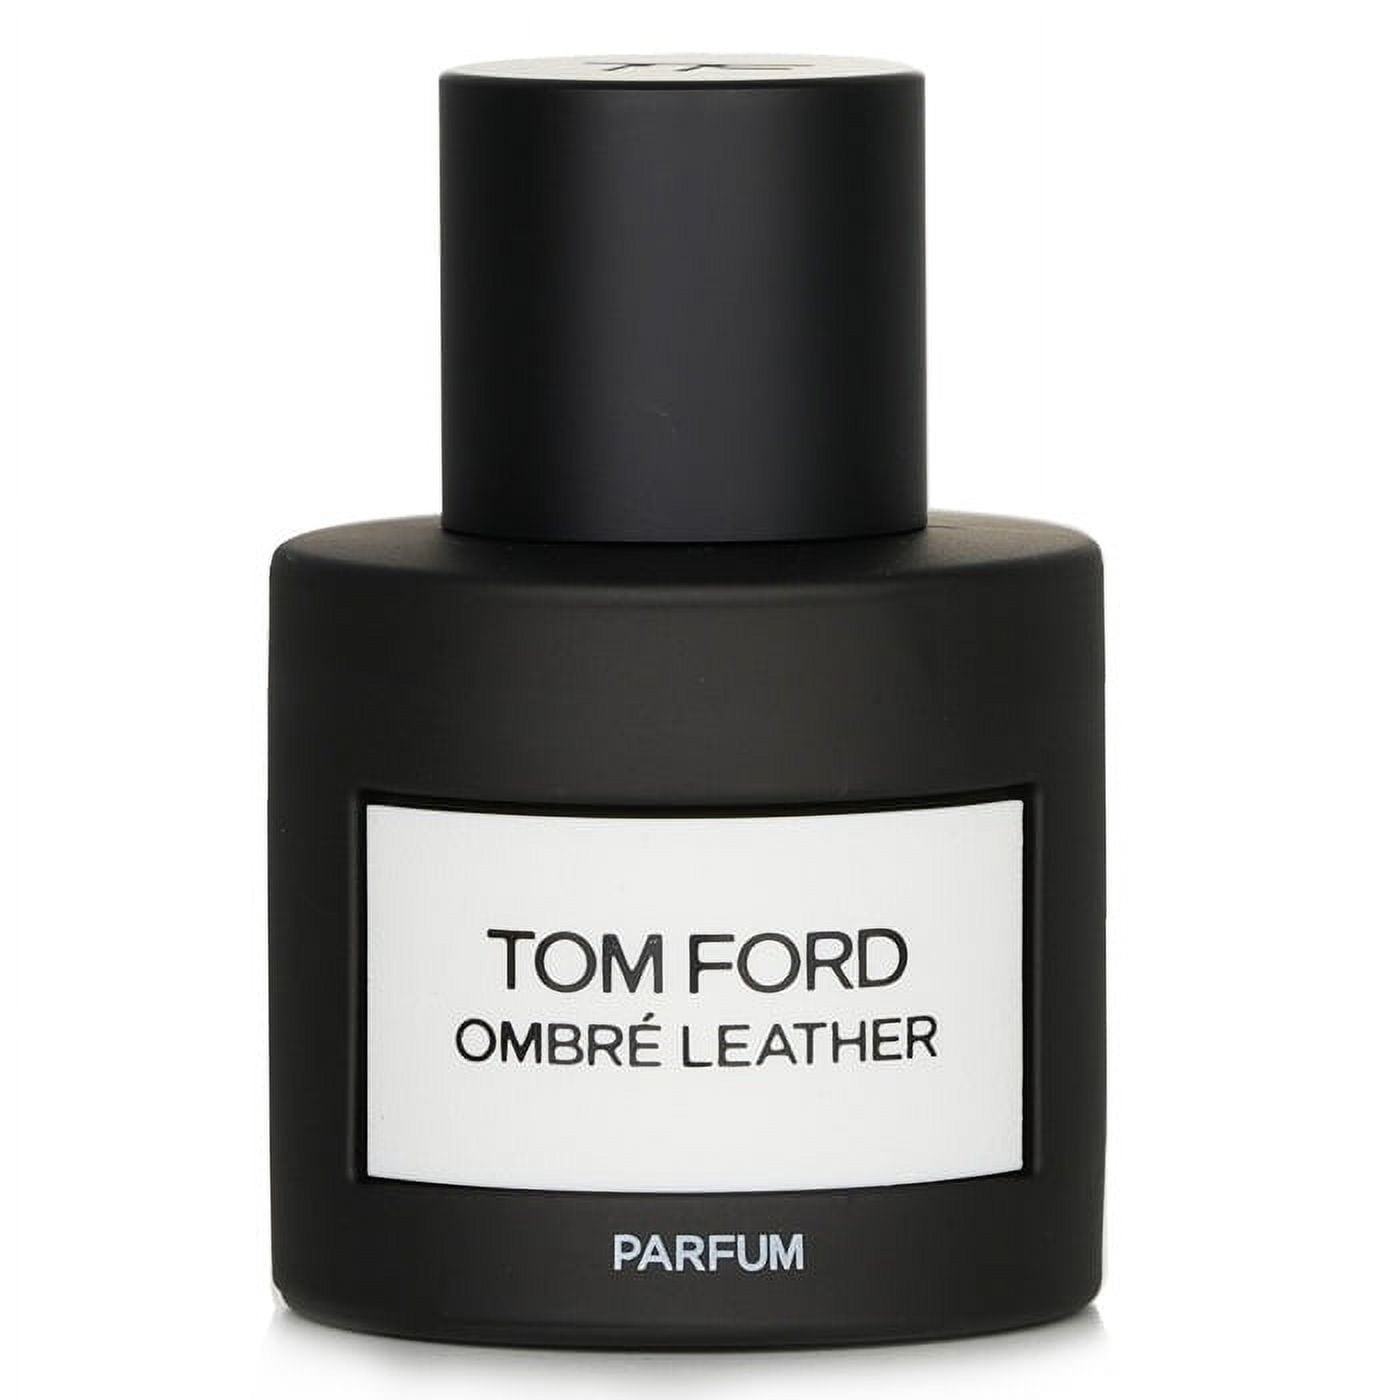 Tom Ford Ombre Leather Parfum Spray 50ml/1.7oz - Walmart.com